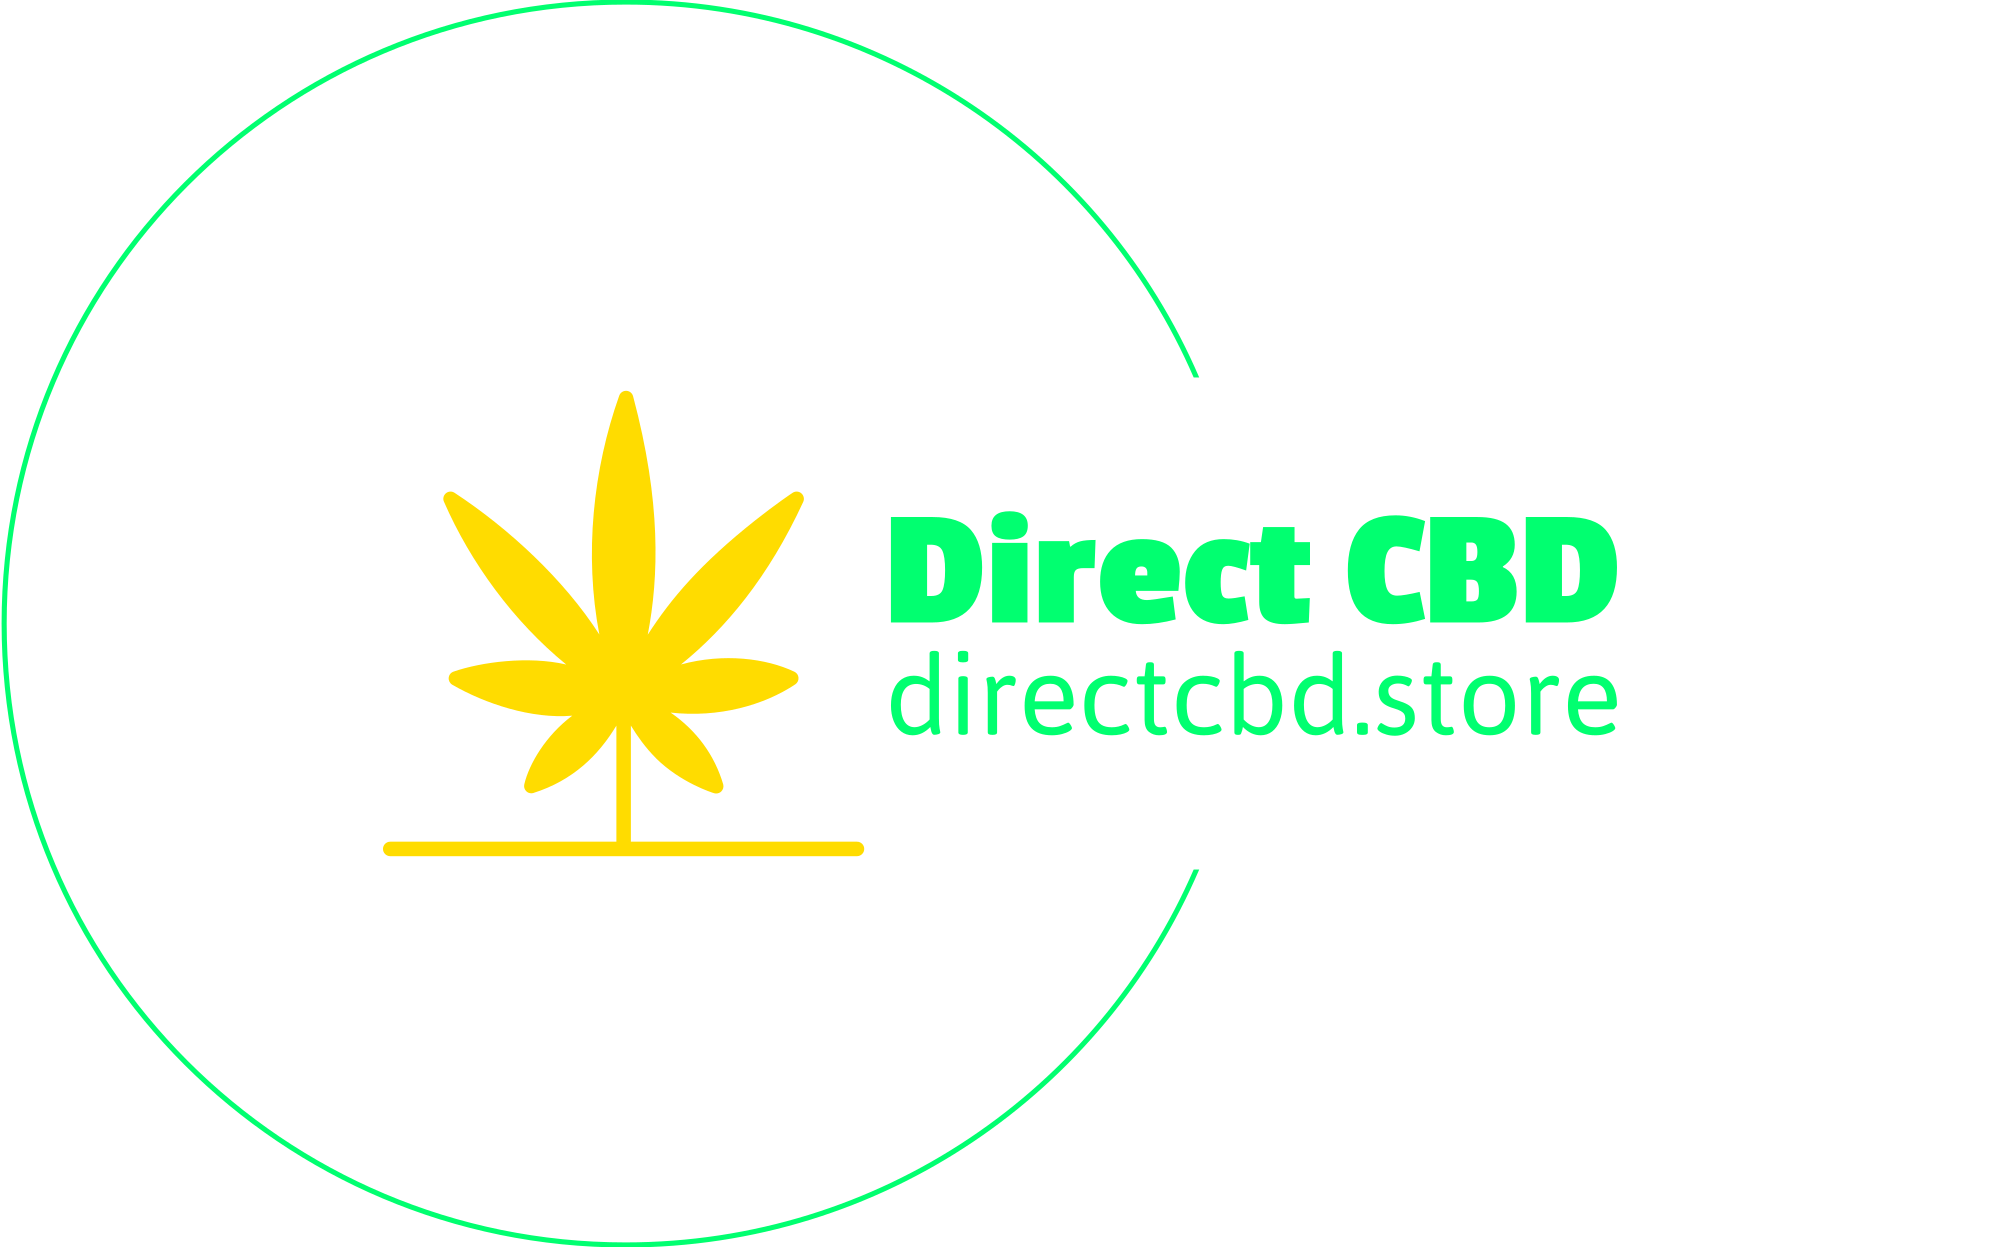 directcbd.store